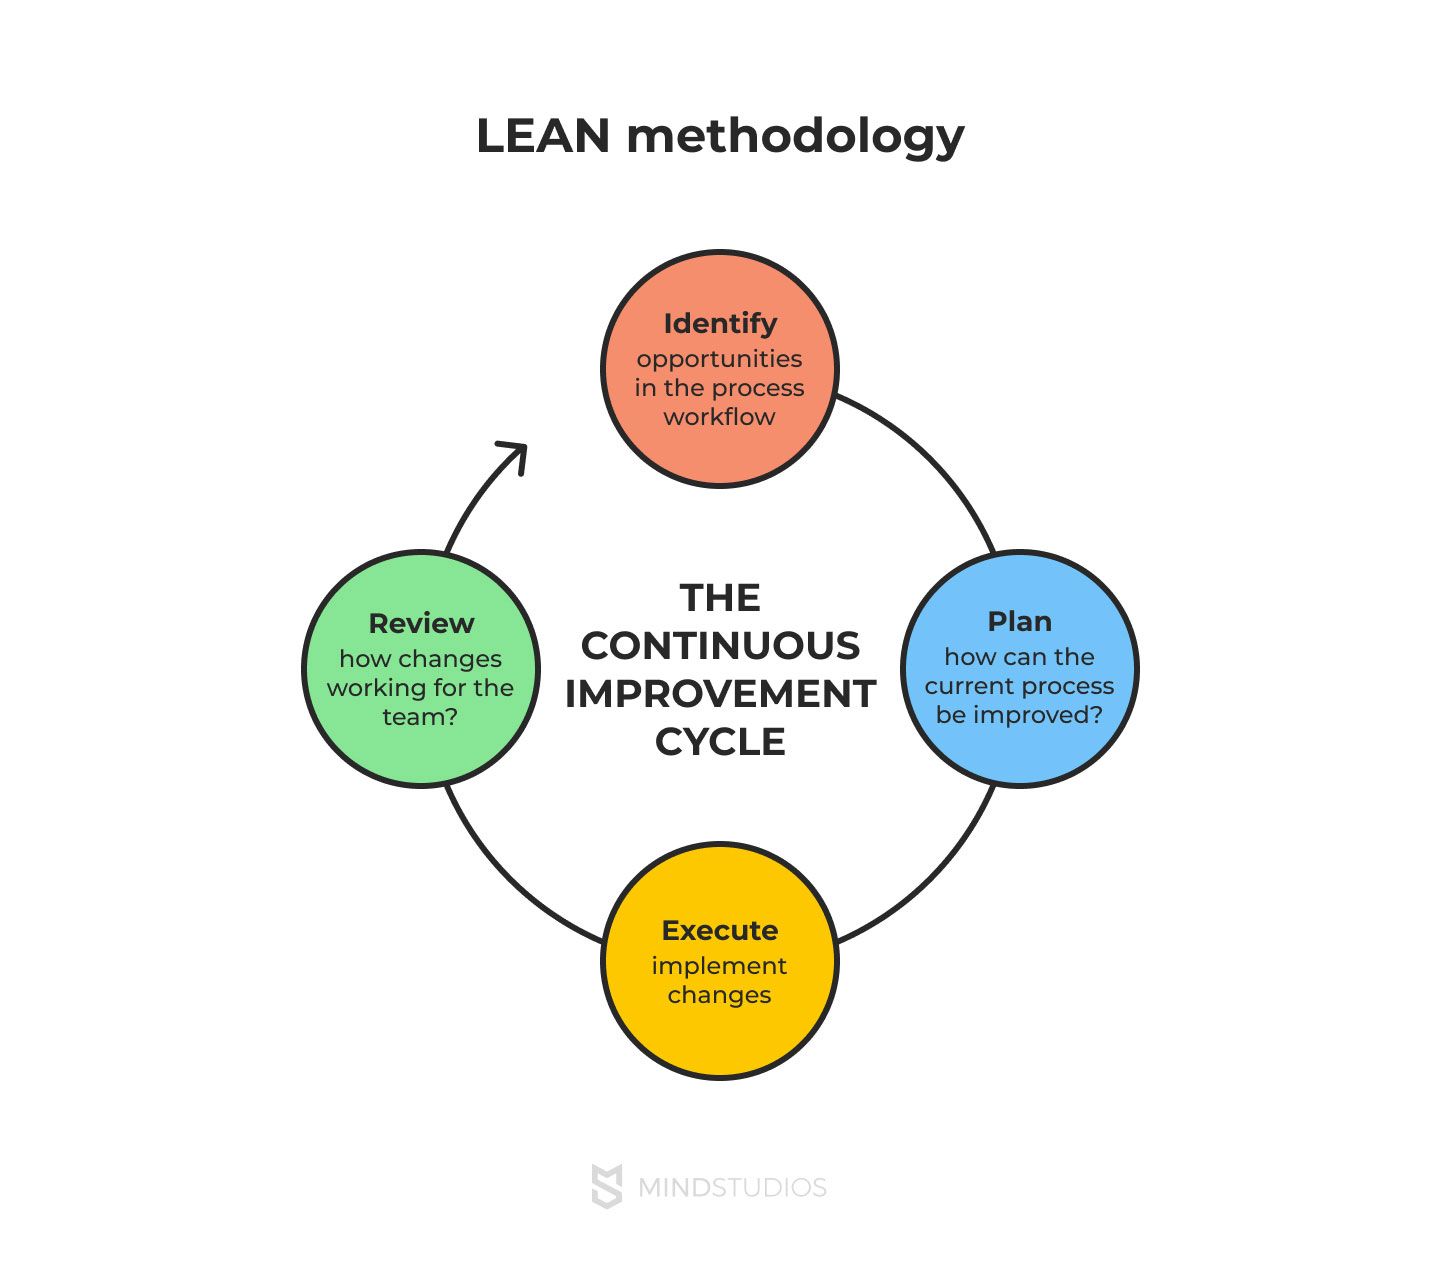 LEAN methodology